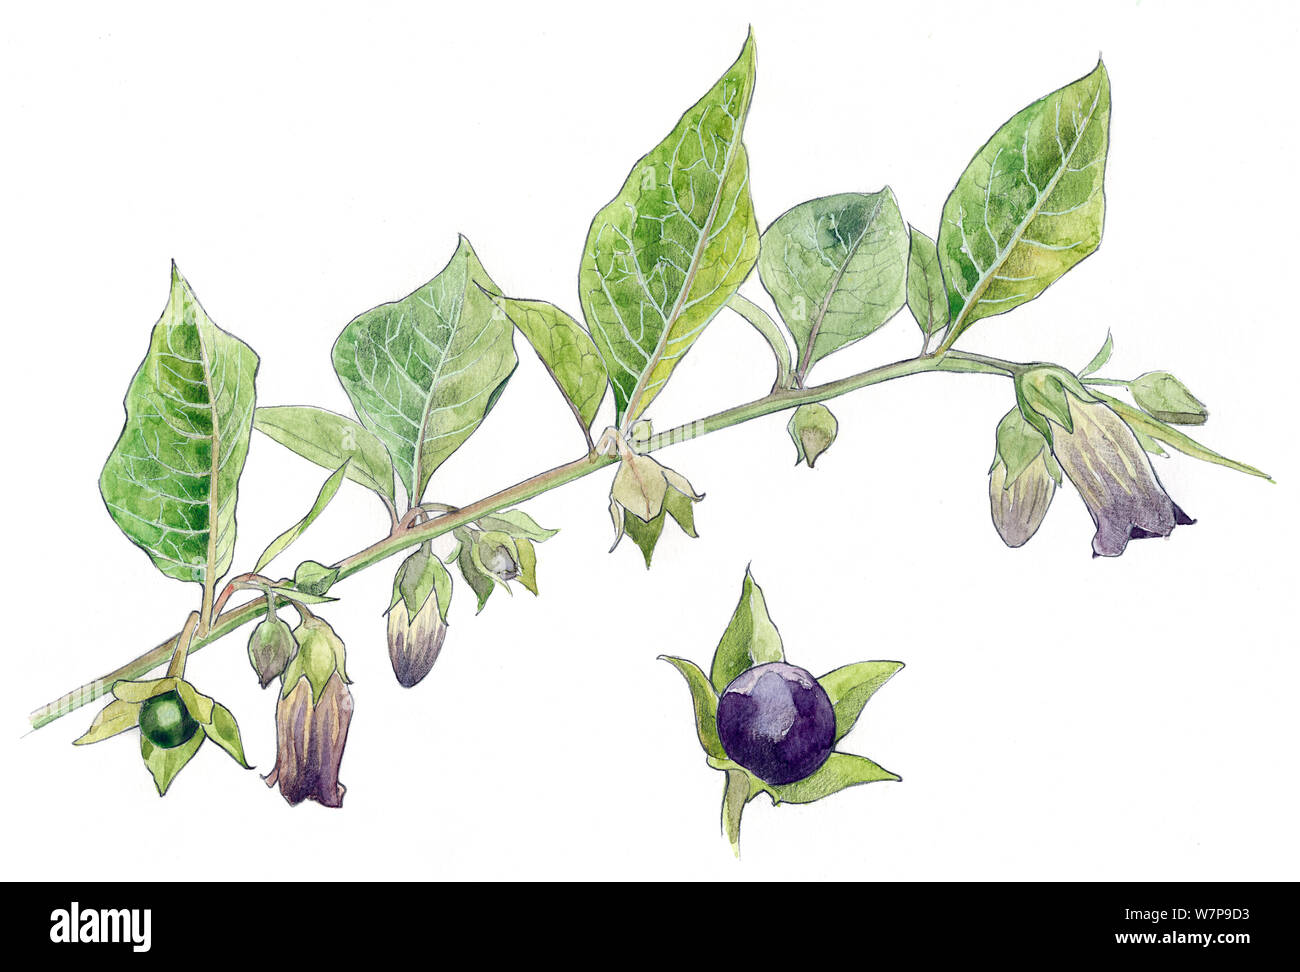 Illustration of Belladonna (Atropa belladonna). Pencil and watercolor painting. Stock Photo